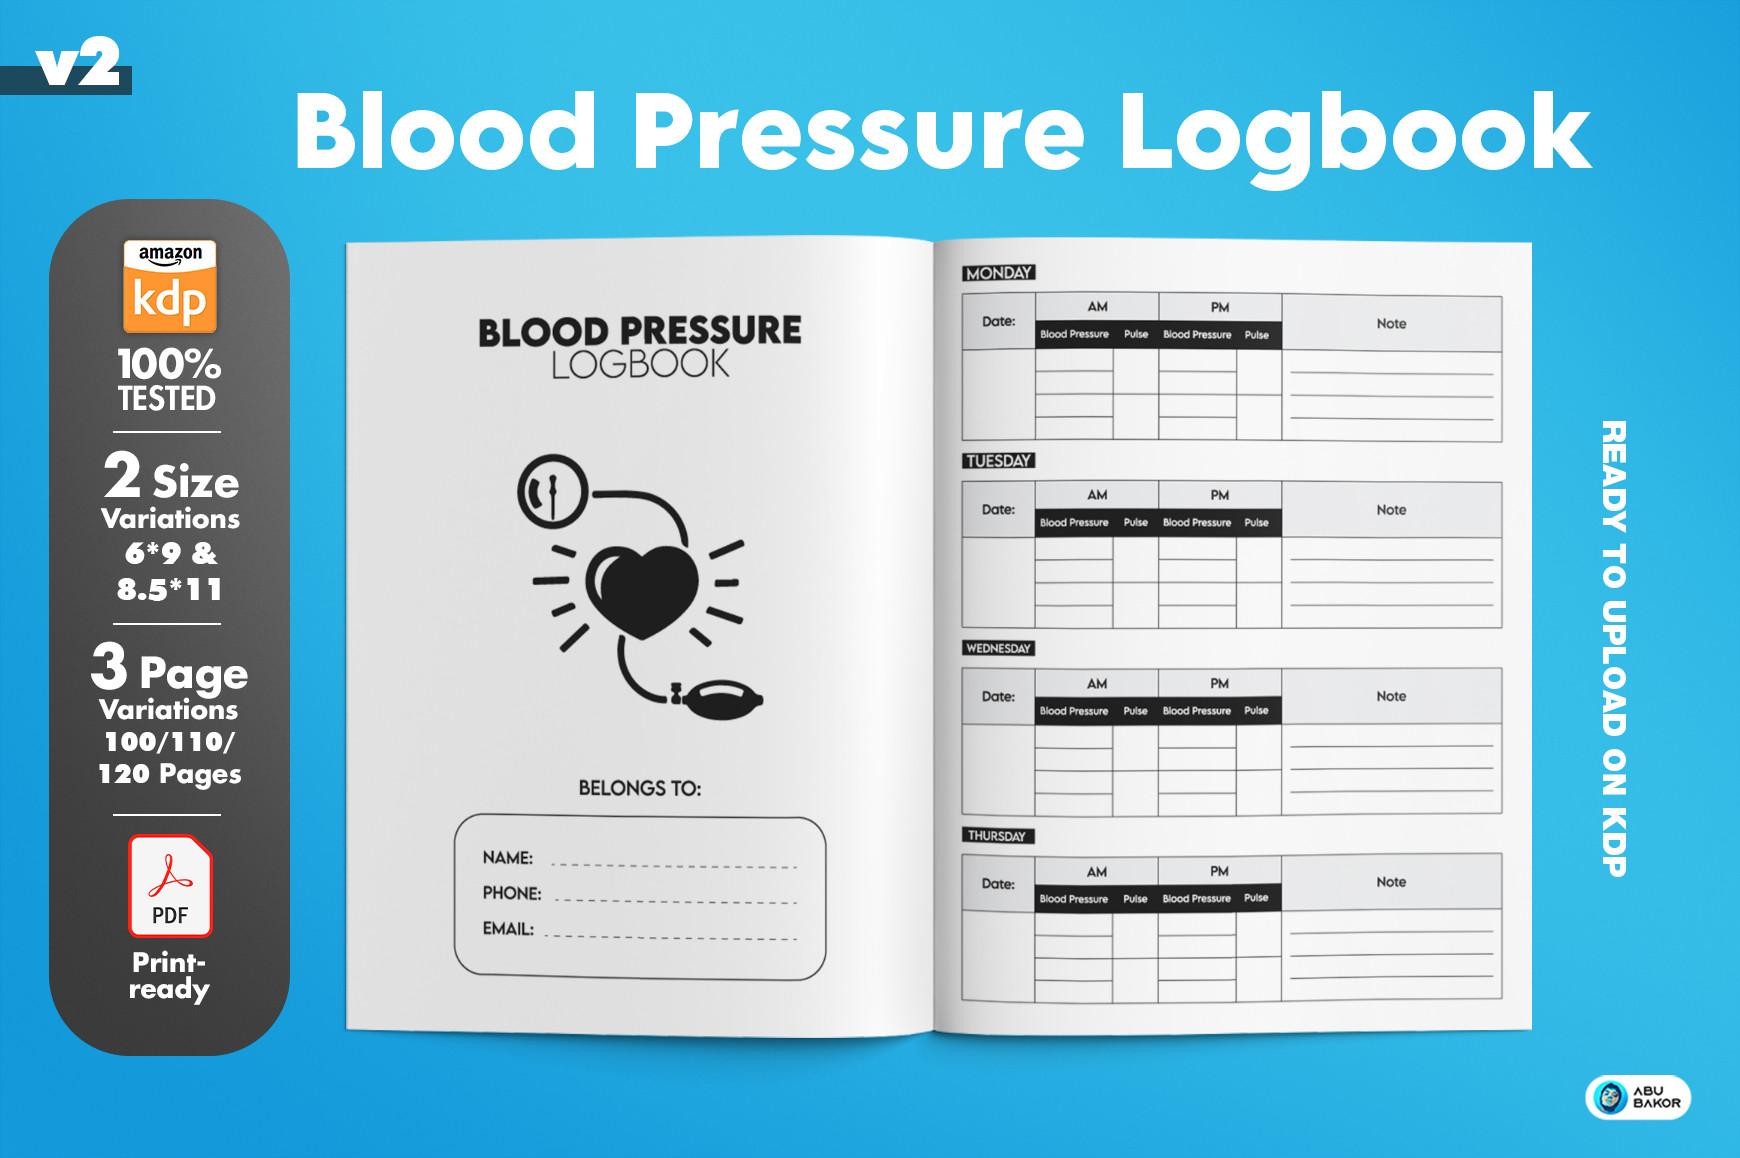 Blood Pressure Log Book | KDP Interior